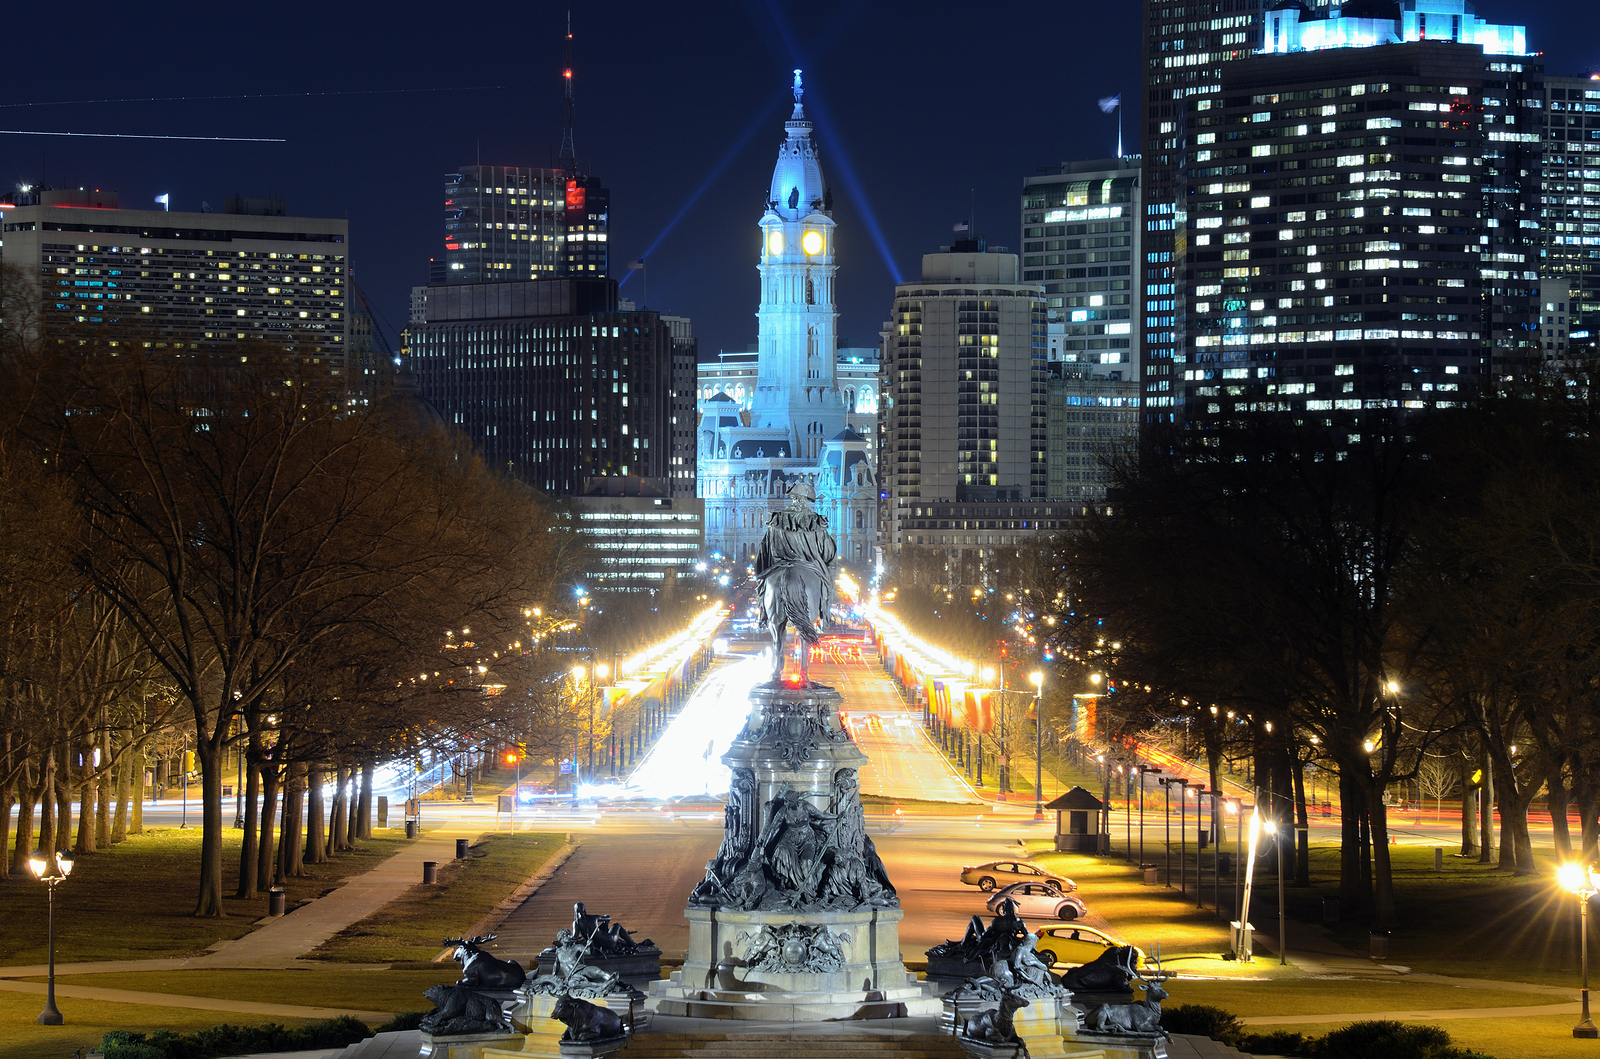 Night time view of Philadelphia City Hall.